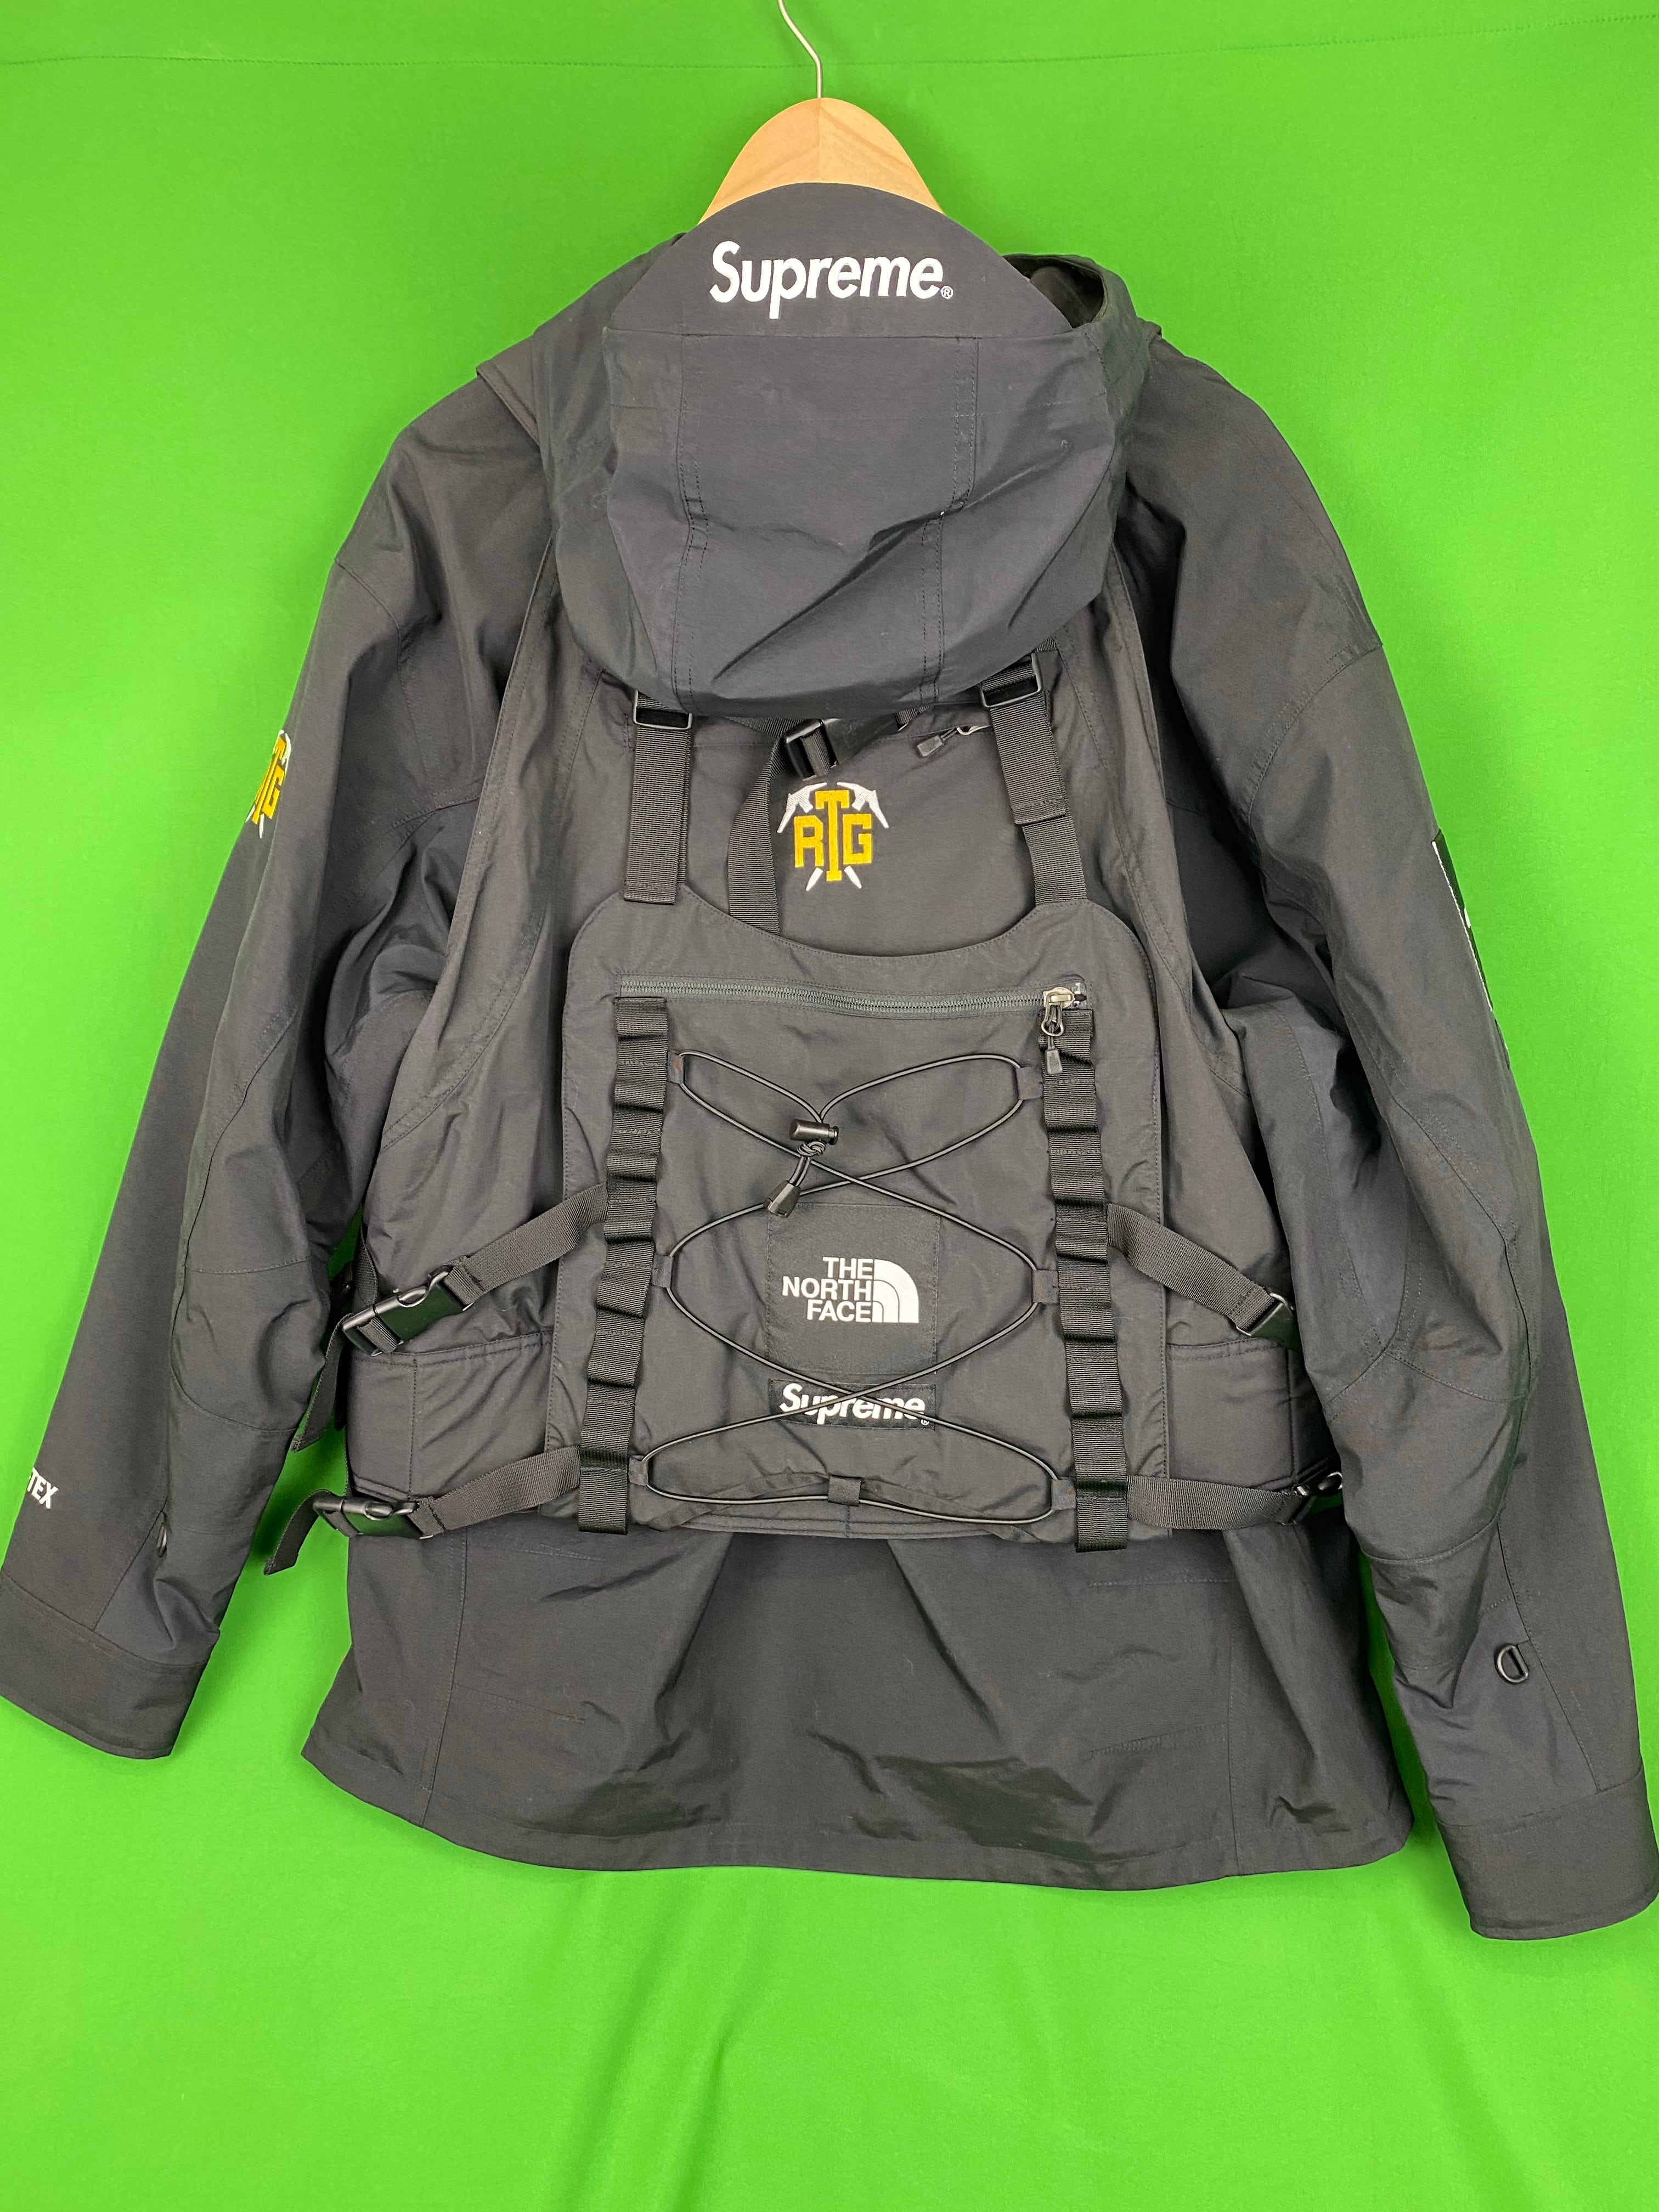 Supreme / The North Face RTG vest